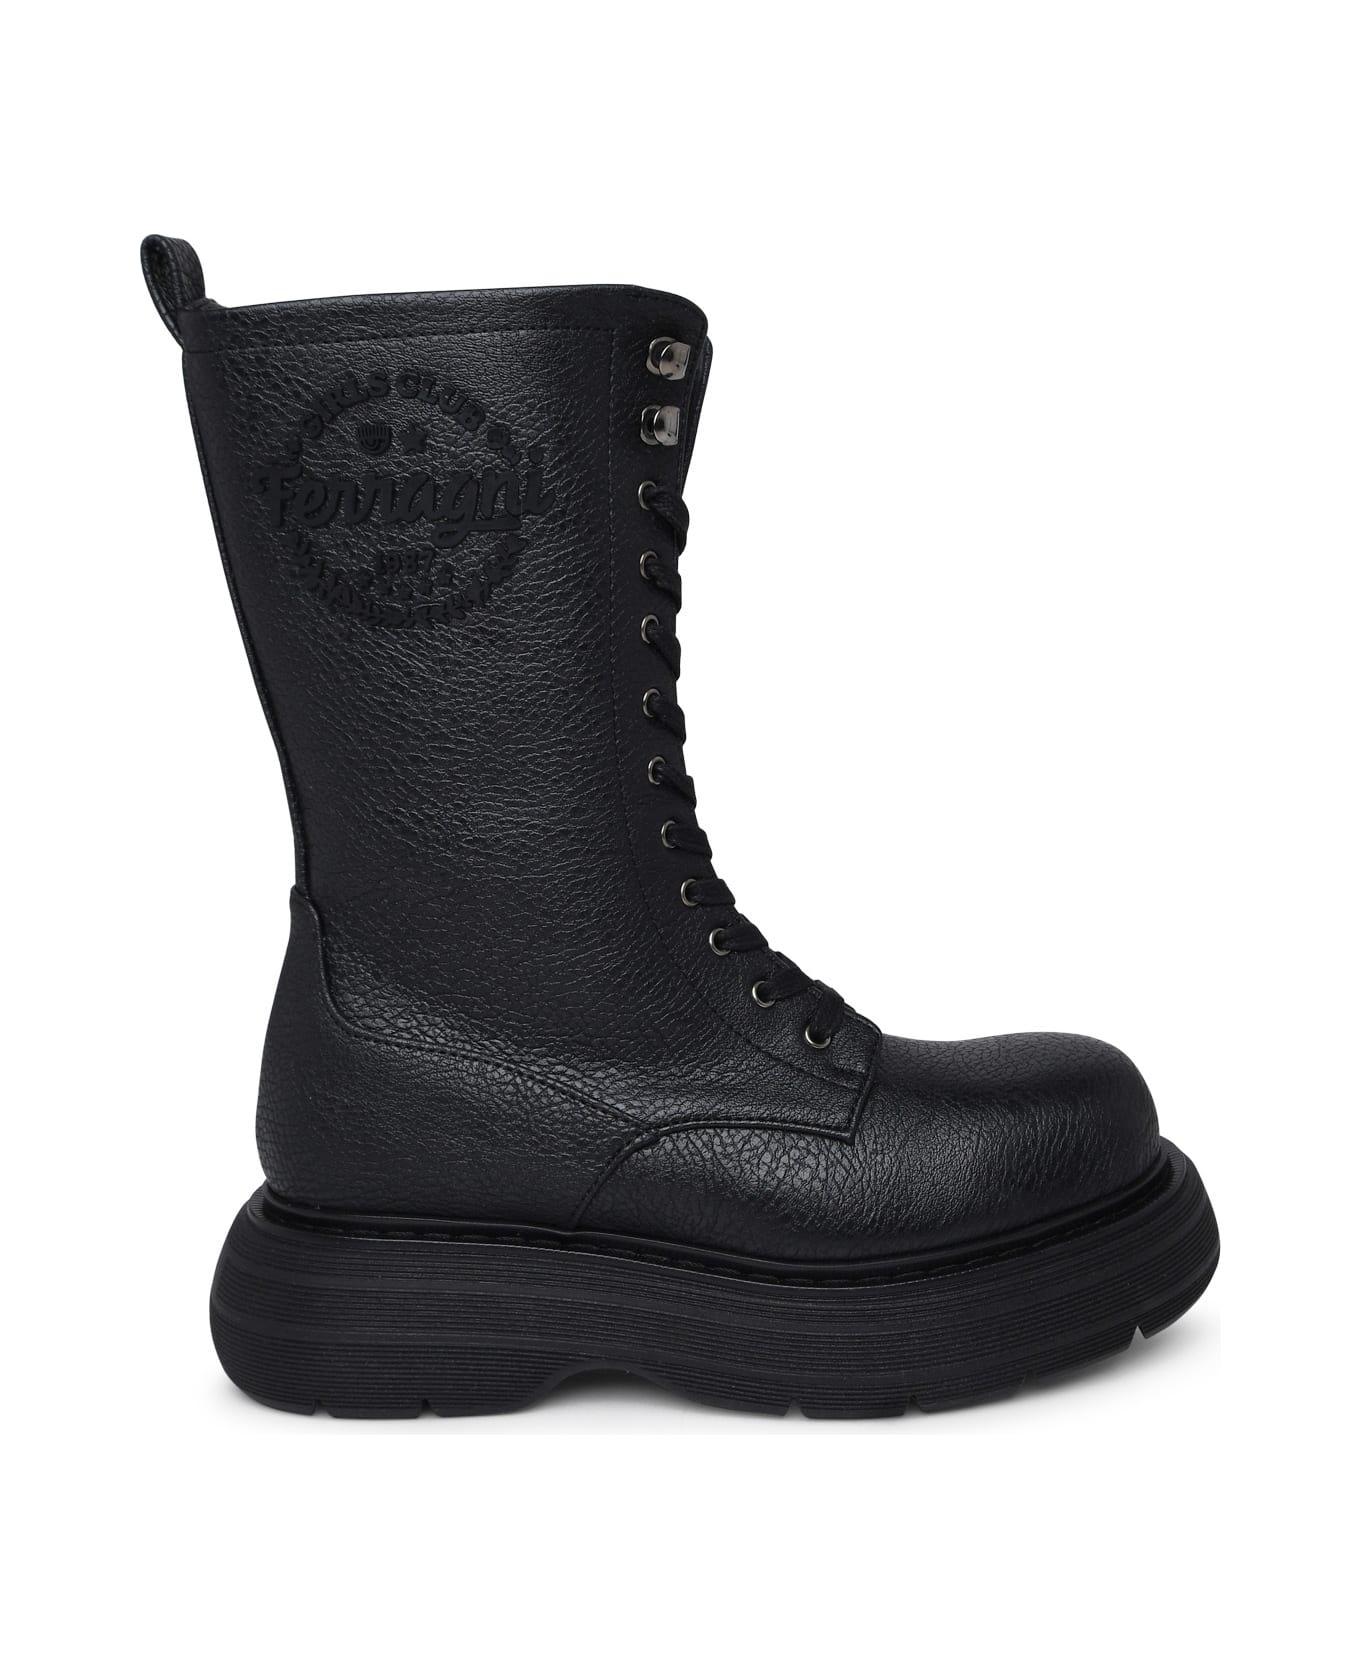 Chiara Ferragni 'ghirls' Black Hammered Leather Amphibious Boots - Black ブーツ